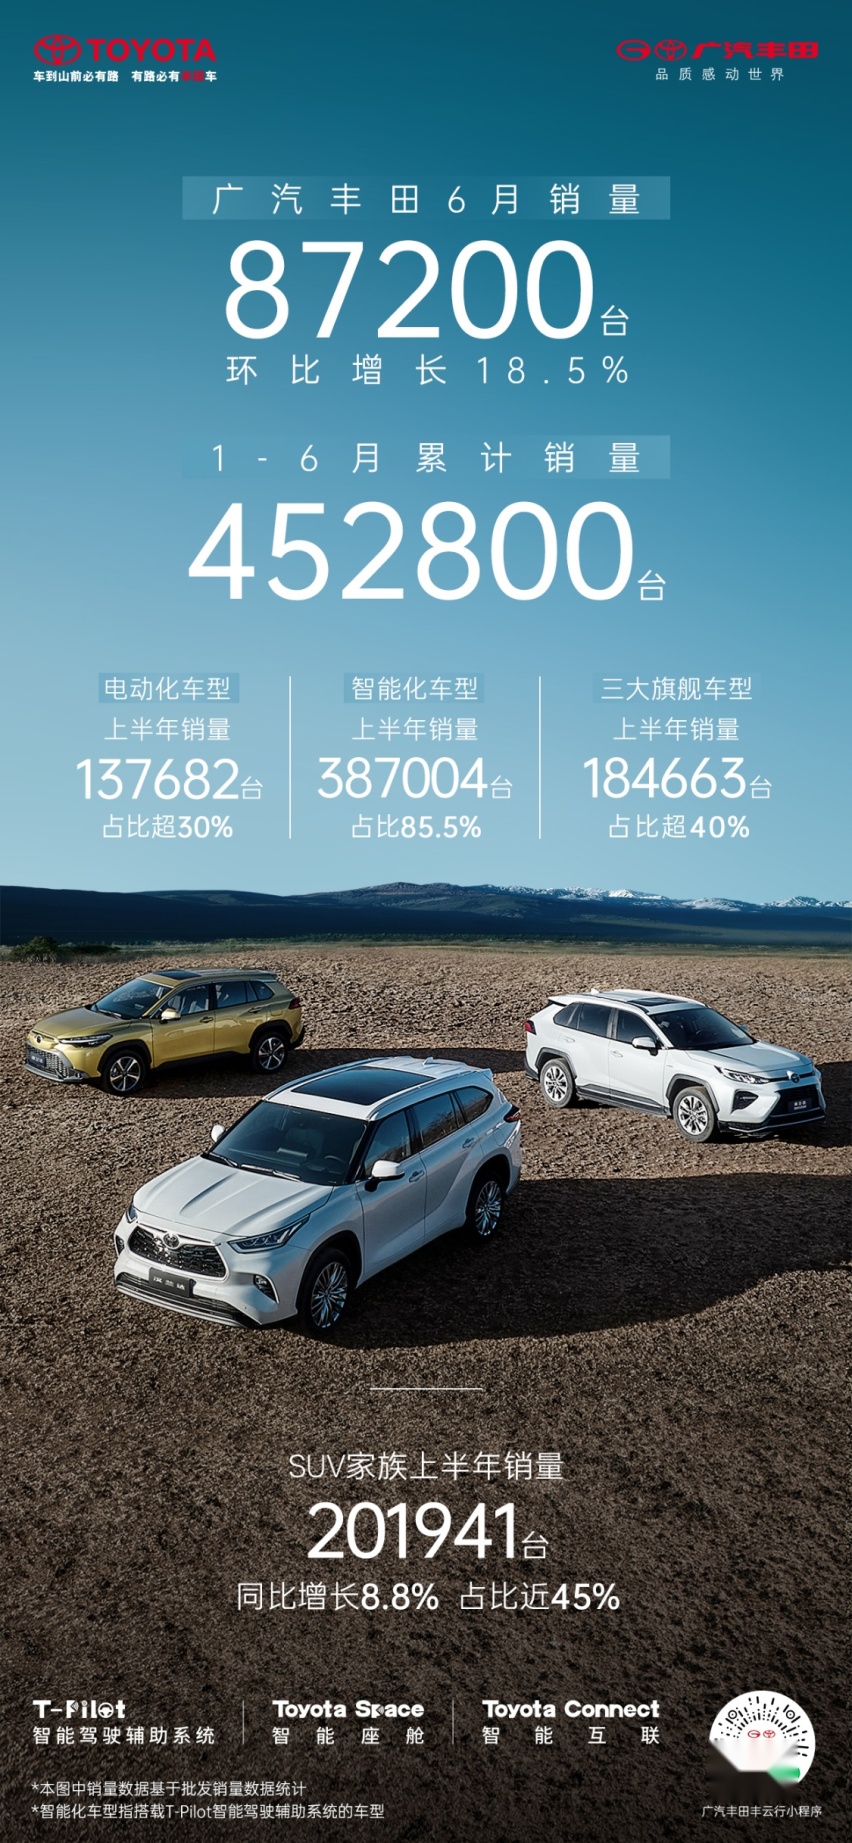 SUV家族持续发力，广汽丰田上半年累计销量 452,800台